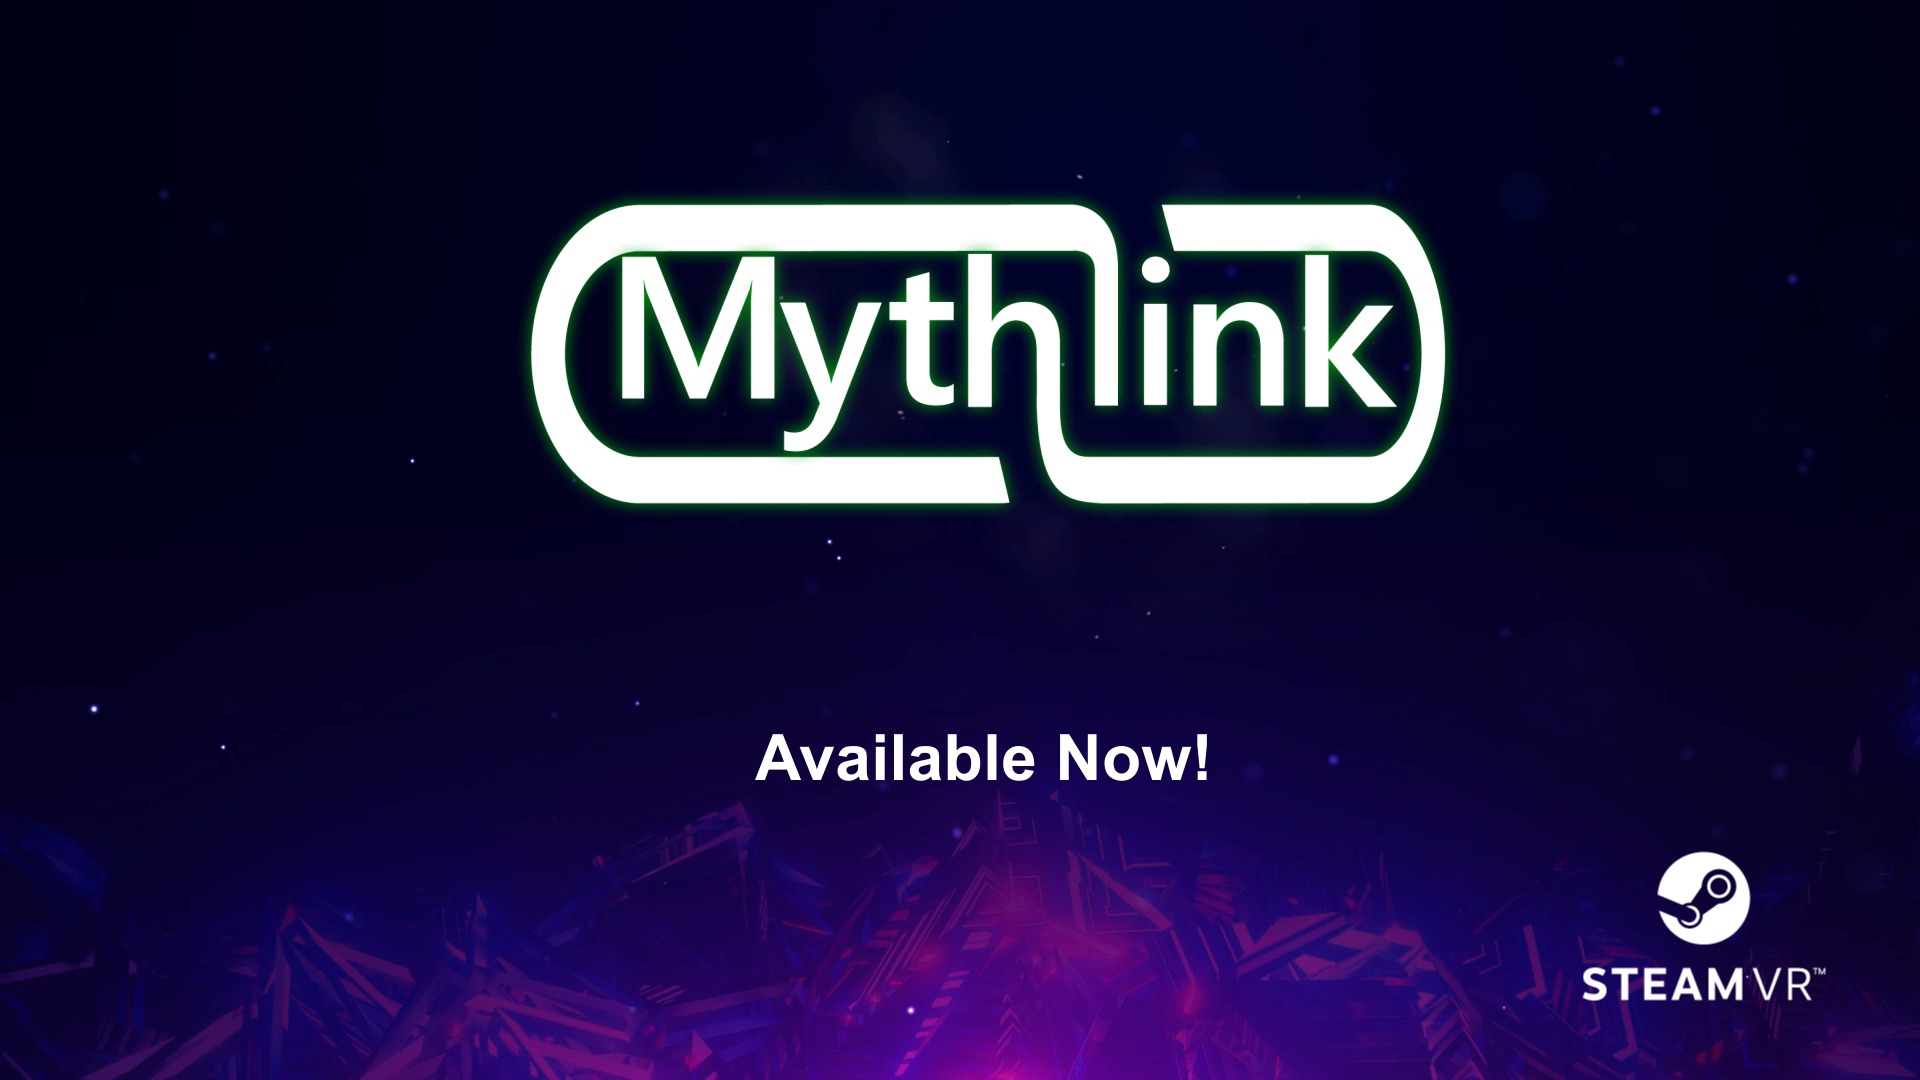 Mythlink Has Been Released!